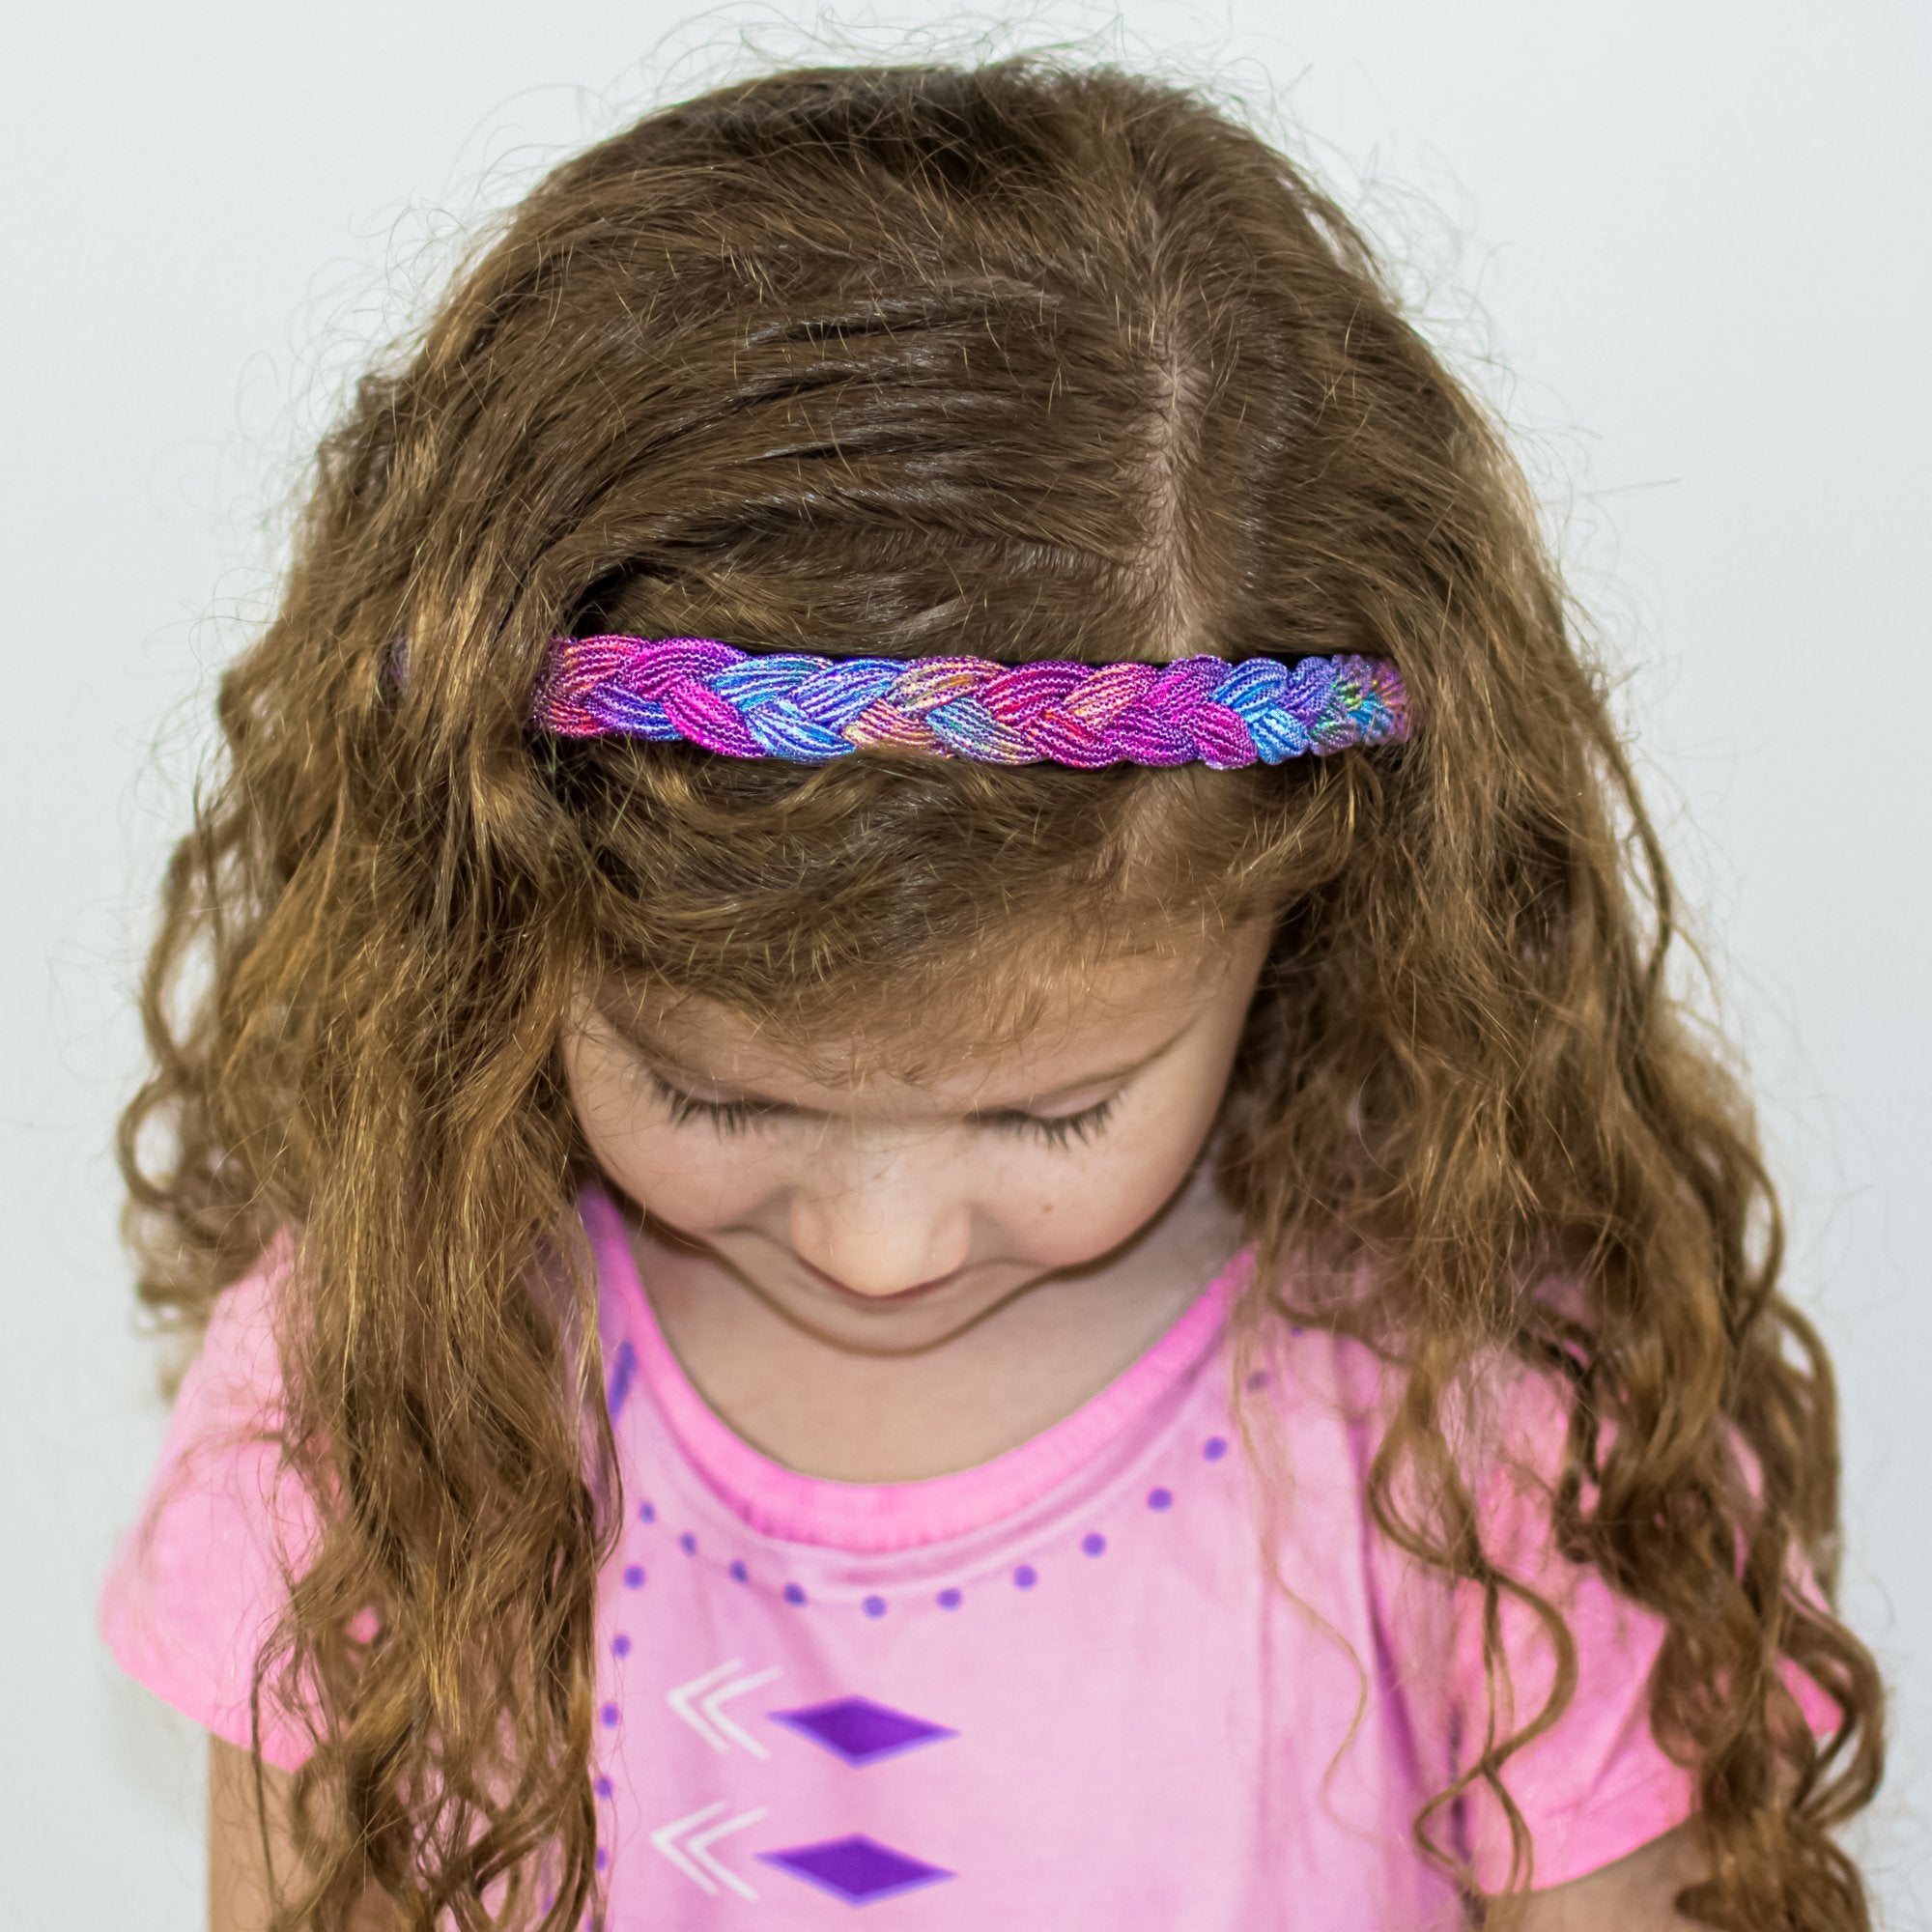 2pcs Metallic Rainbow Fabric Braided Headbands For Girls